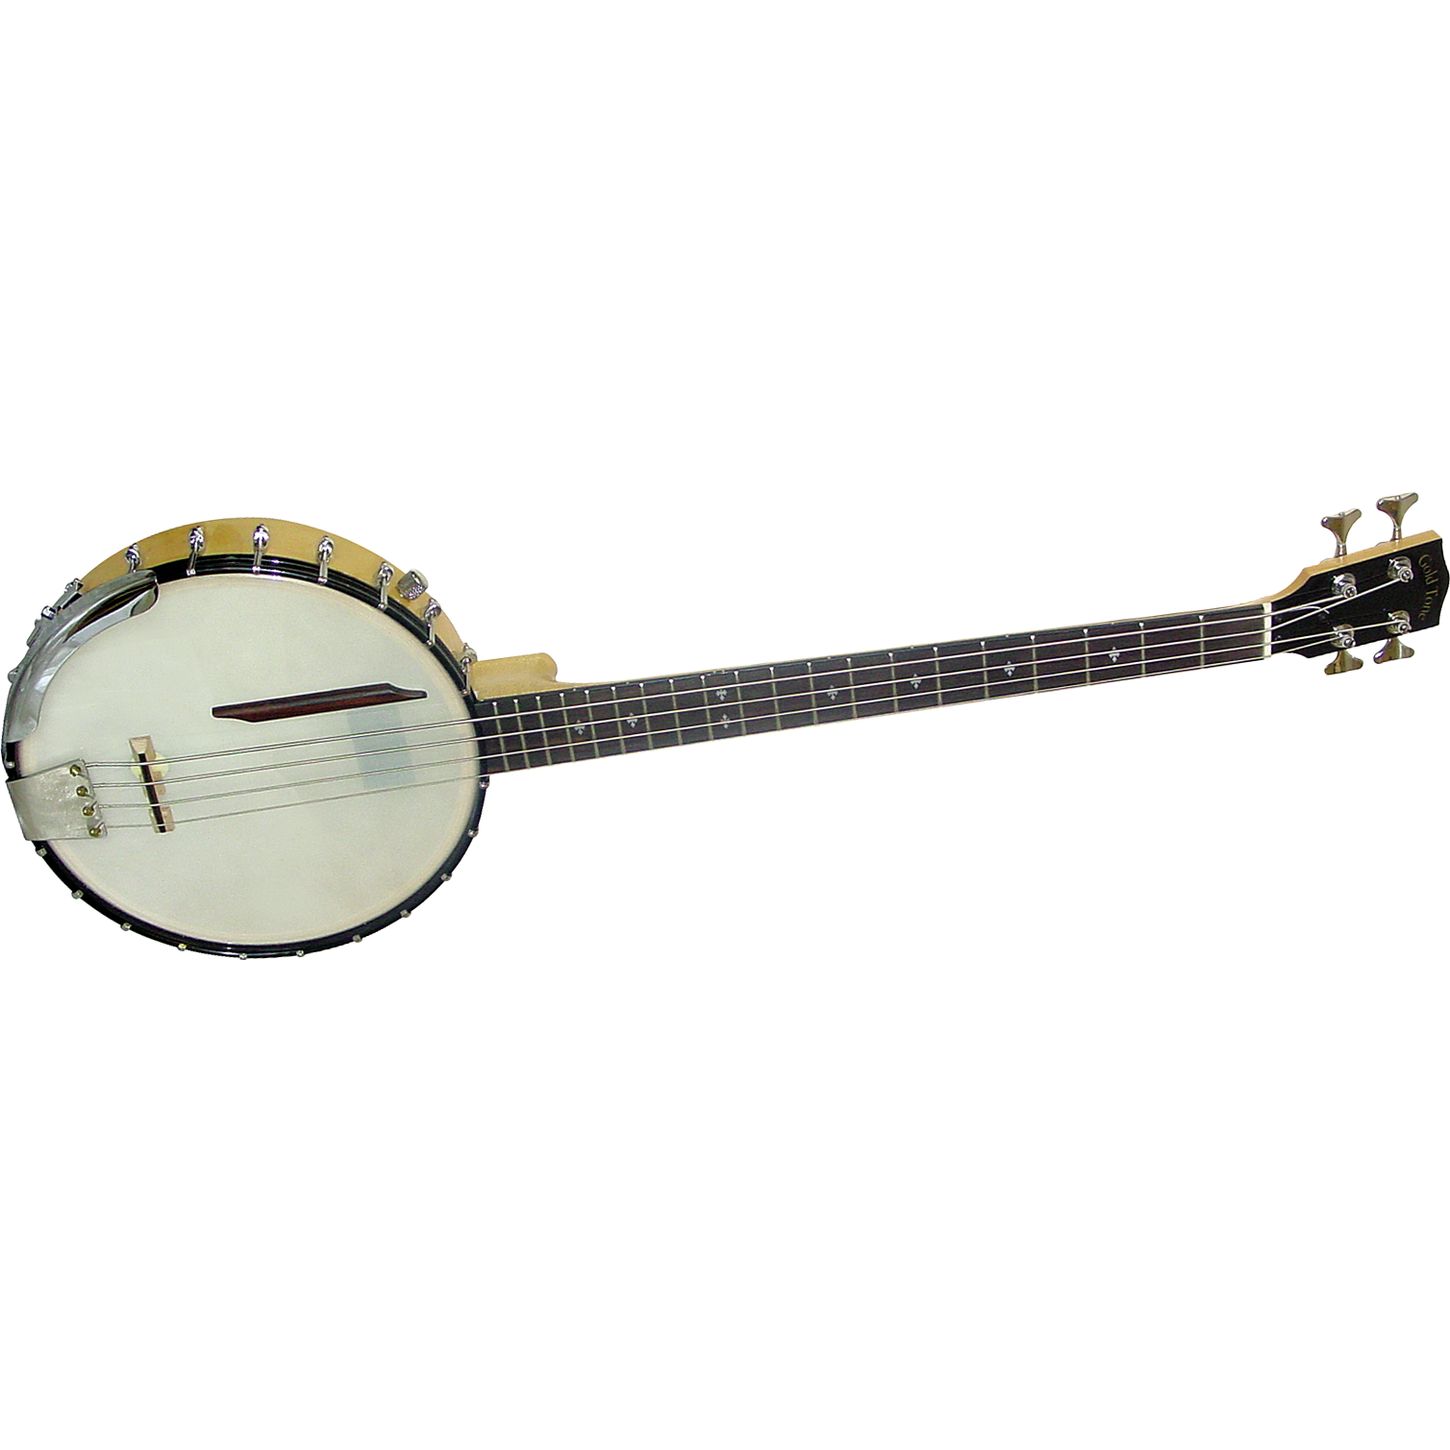 Banjo Bass